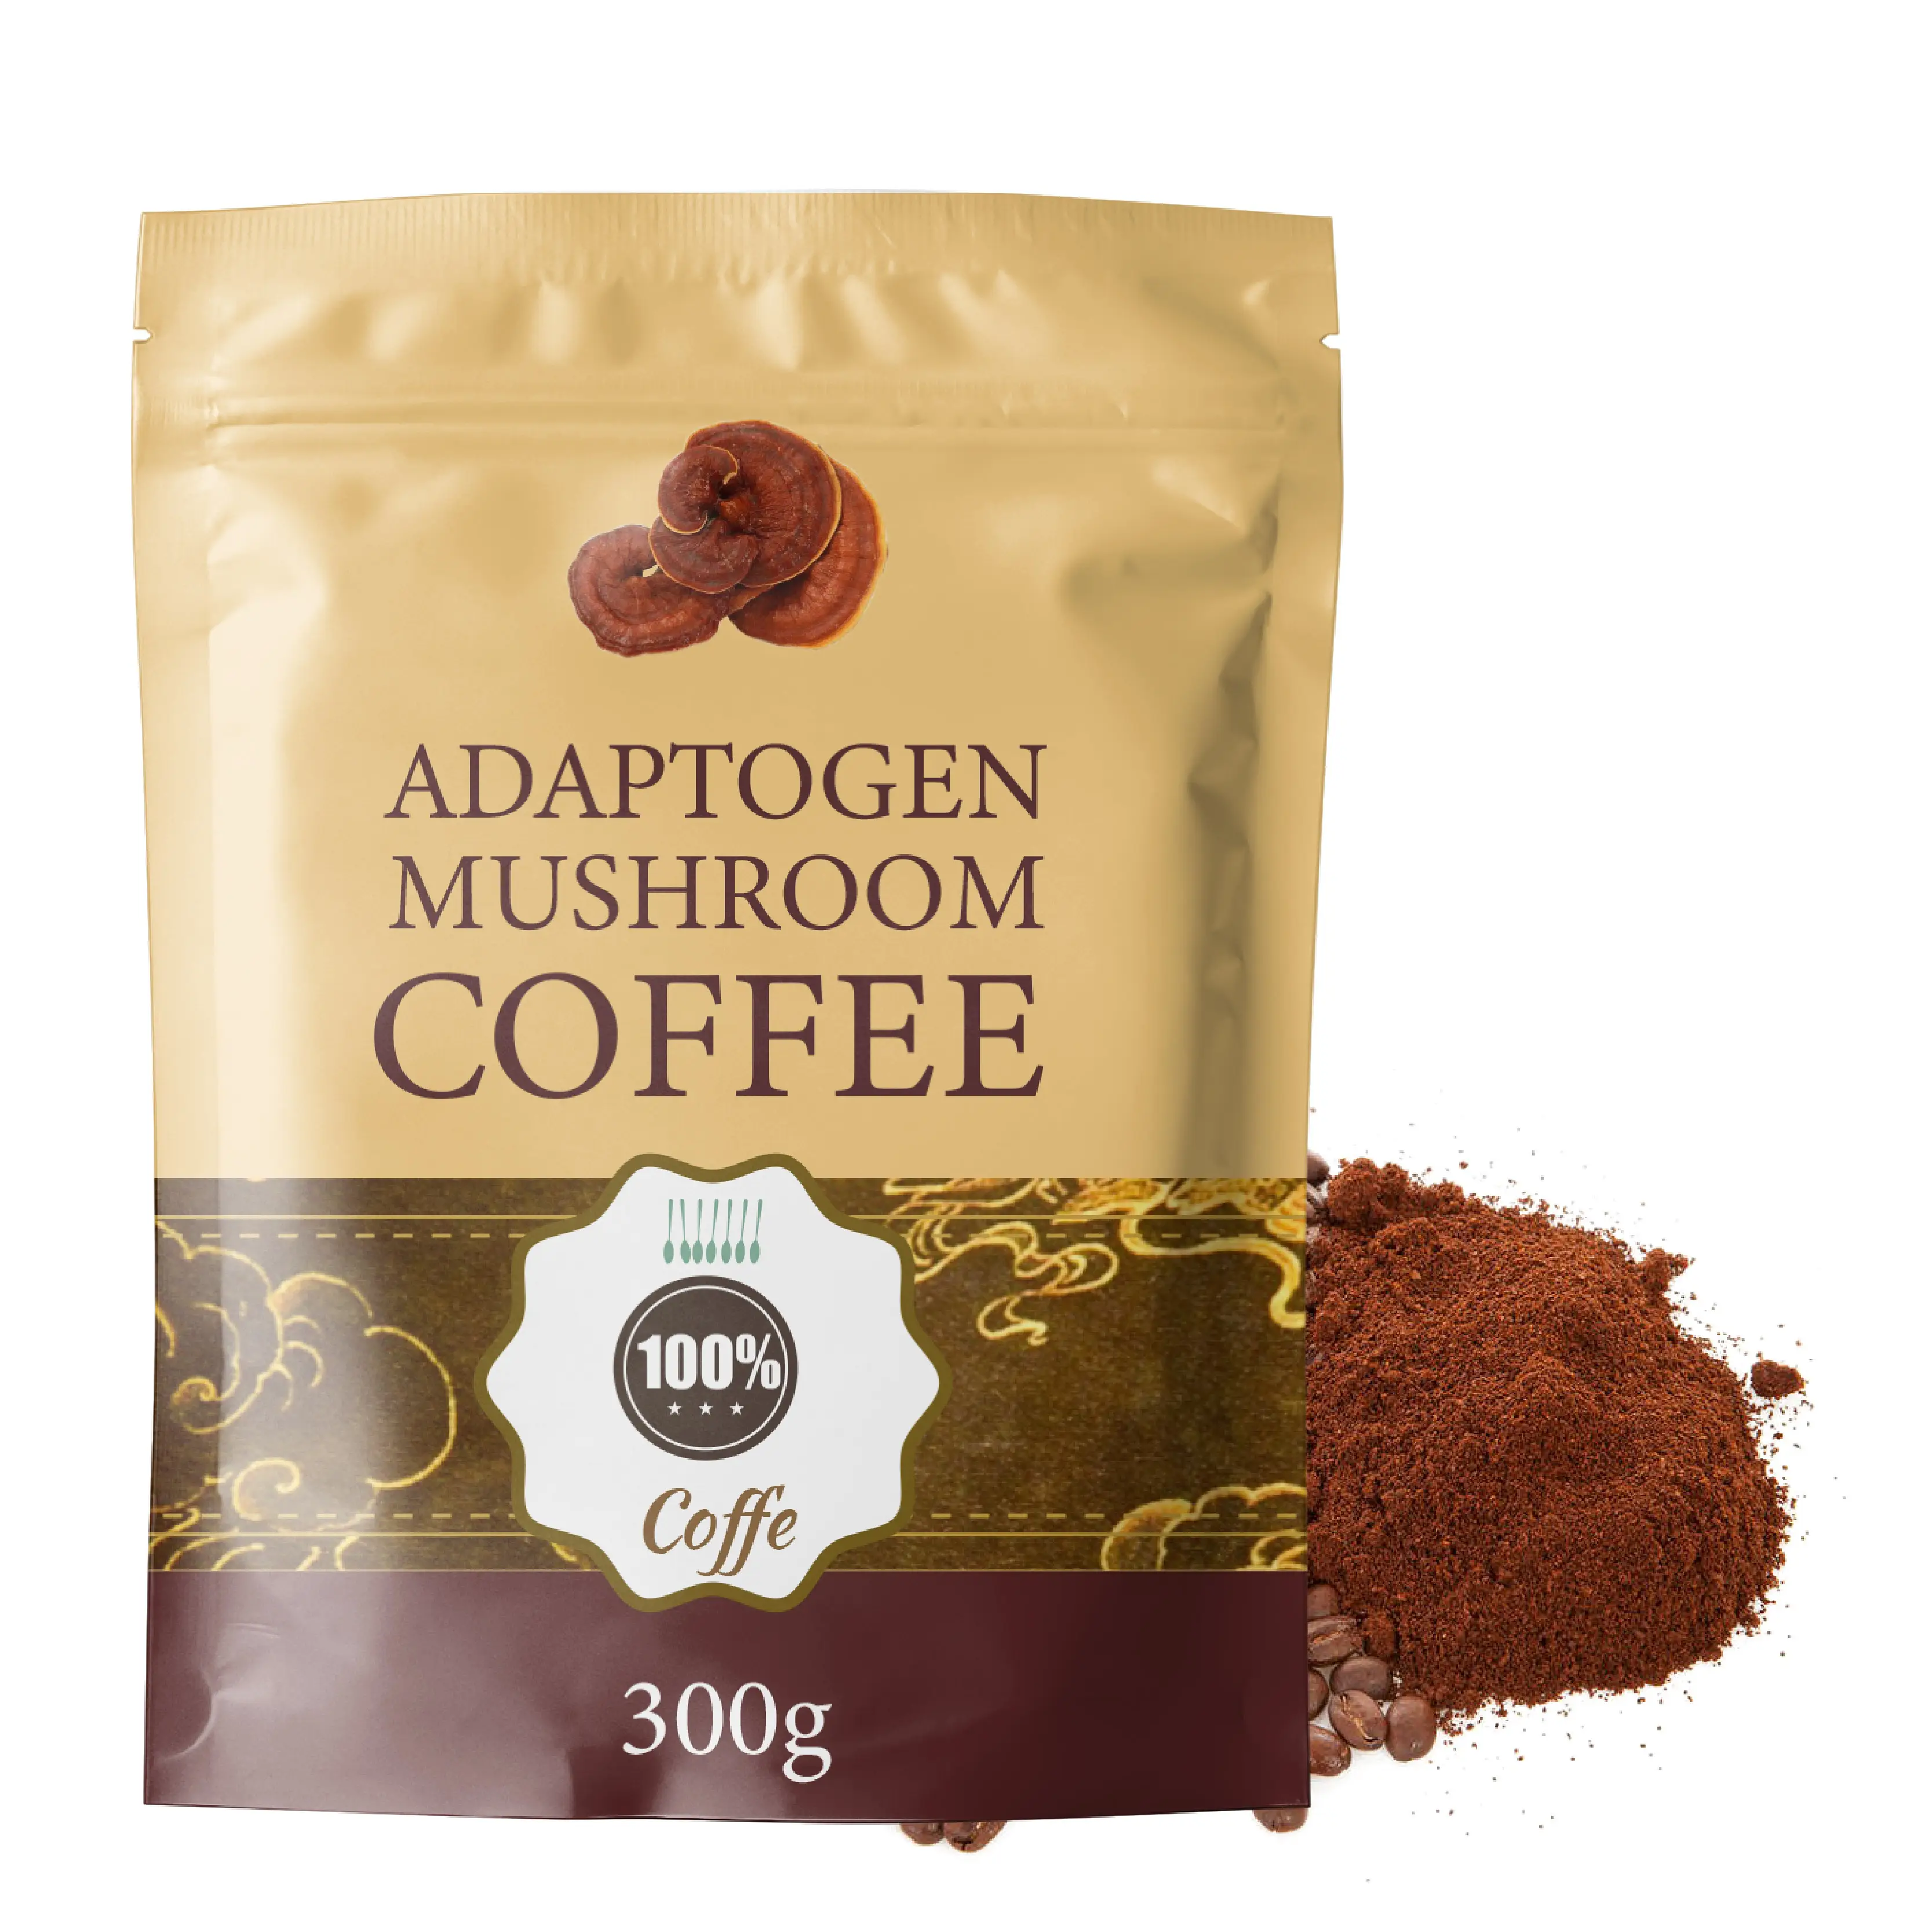 Extracto de micelio Cordyceps Sinensis, café árabe de alta calidad